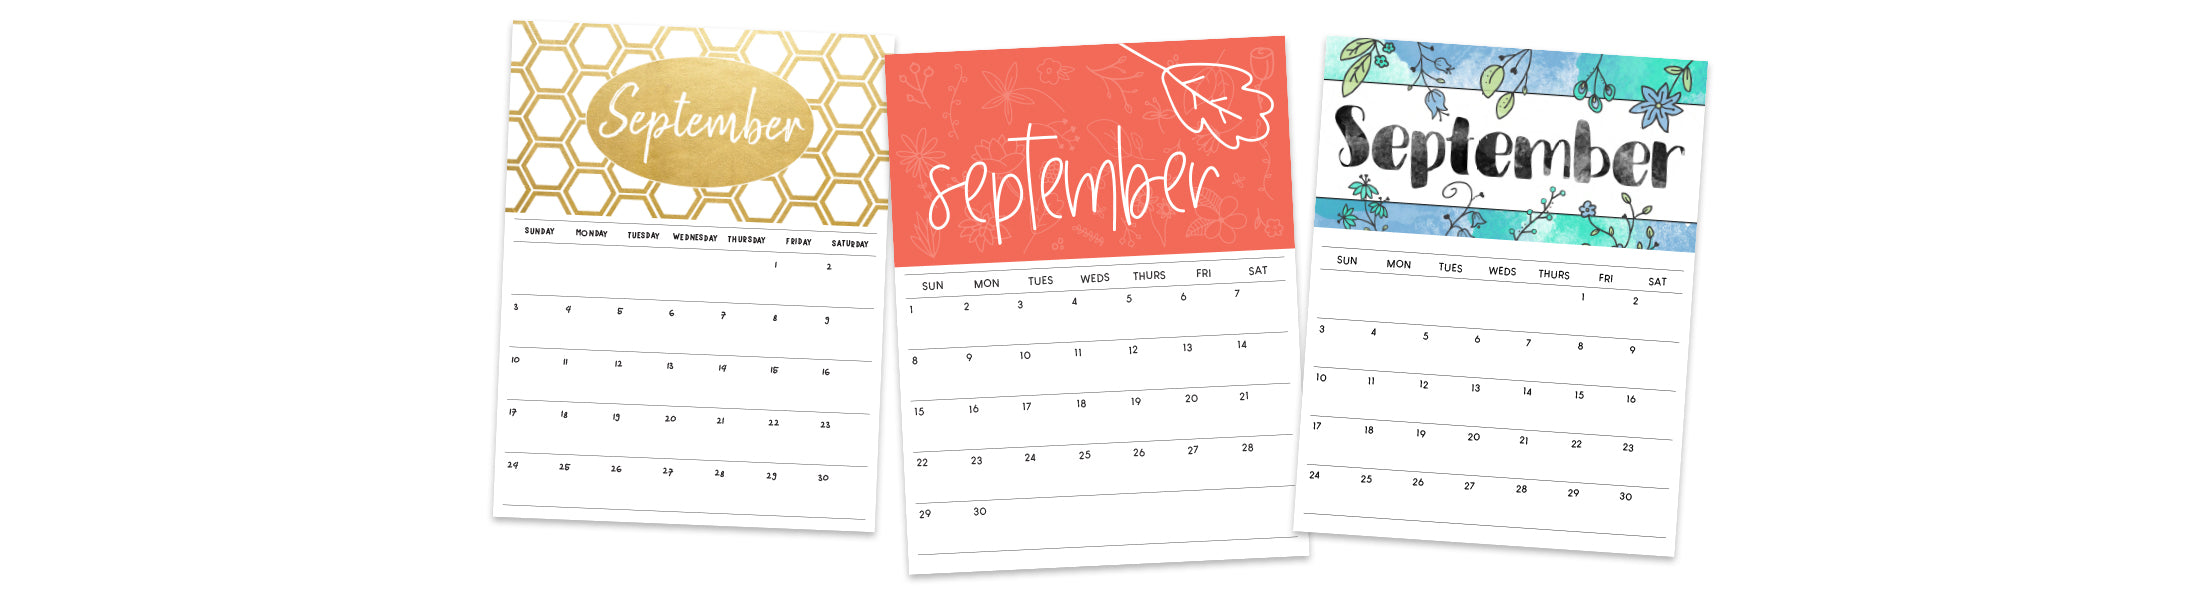 Printable September Calendars